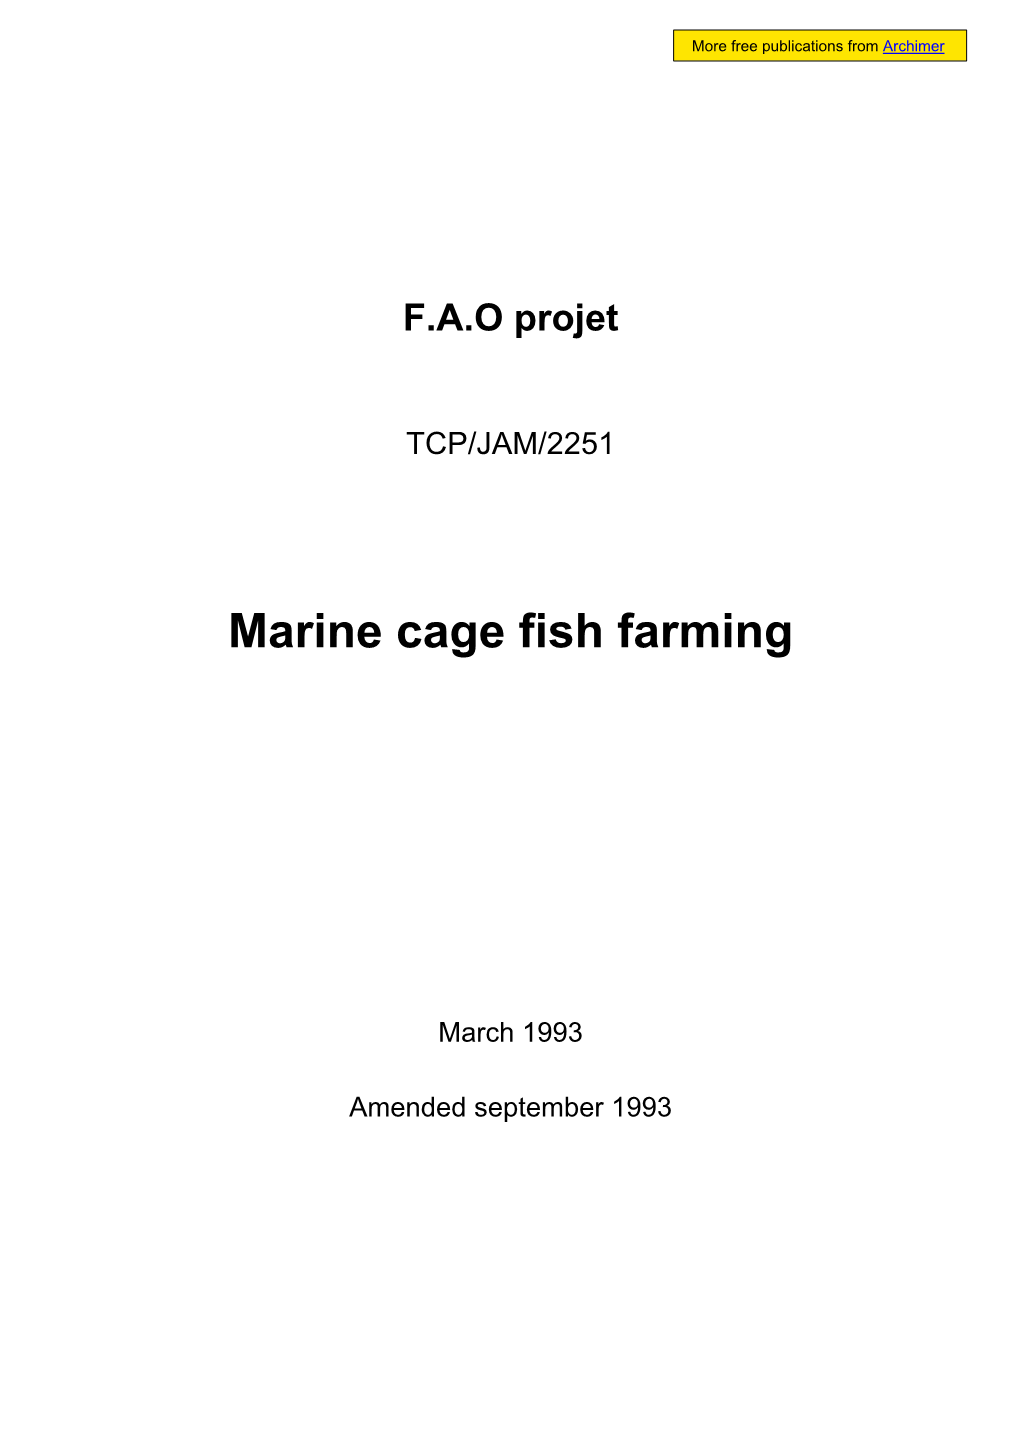 Marine Cage Fish Farming